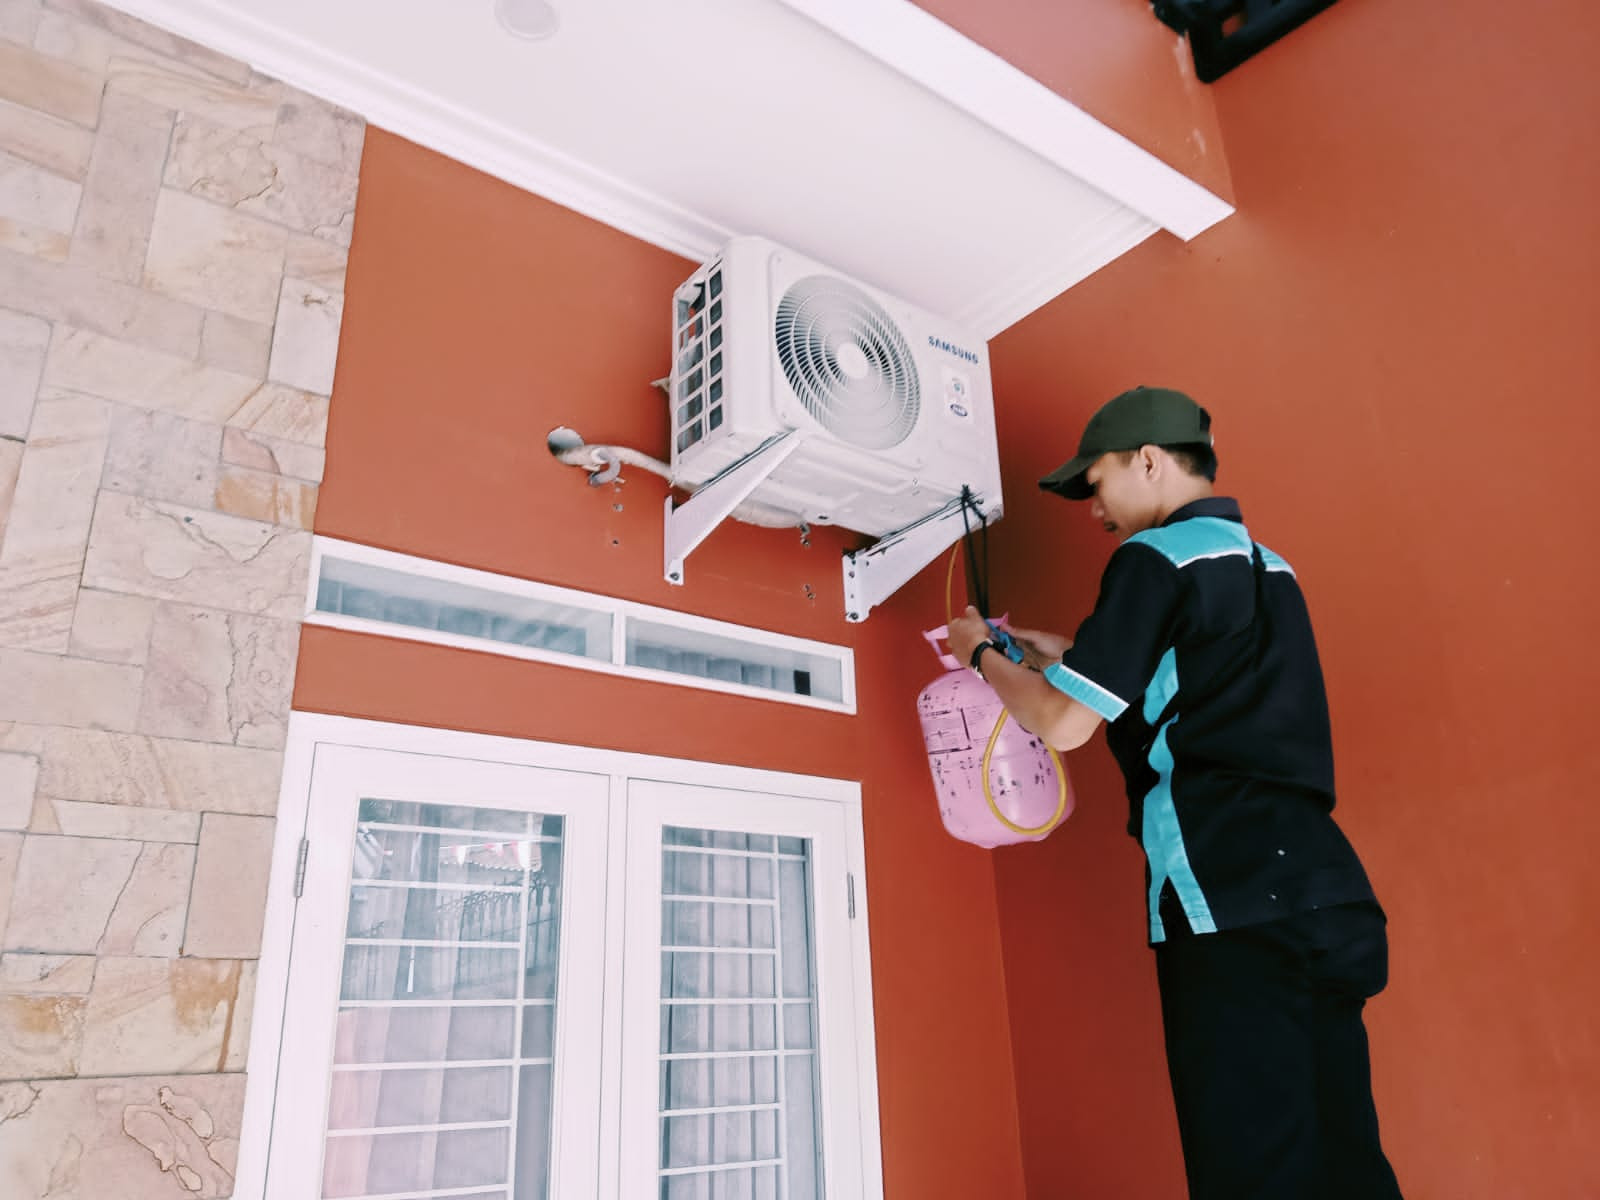 
	
	
	
		Bongkar Pasang AC Air Conditioner Panggilan
		
		 Hubungi 0823-1297-9522
		
	
	
	- Terpercaya dengan Tenaga Expert
	
